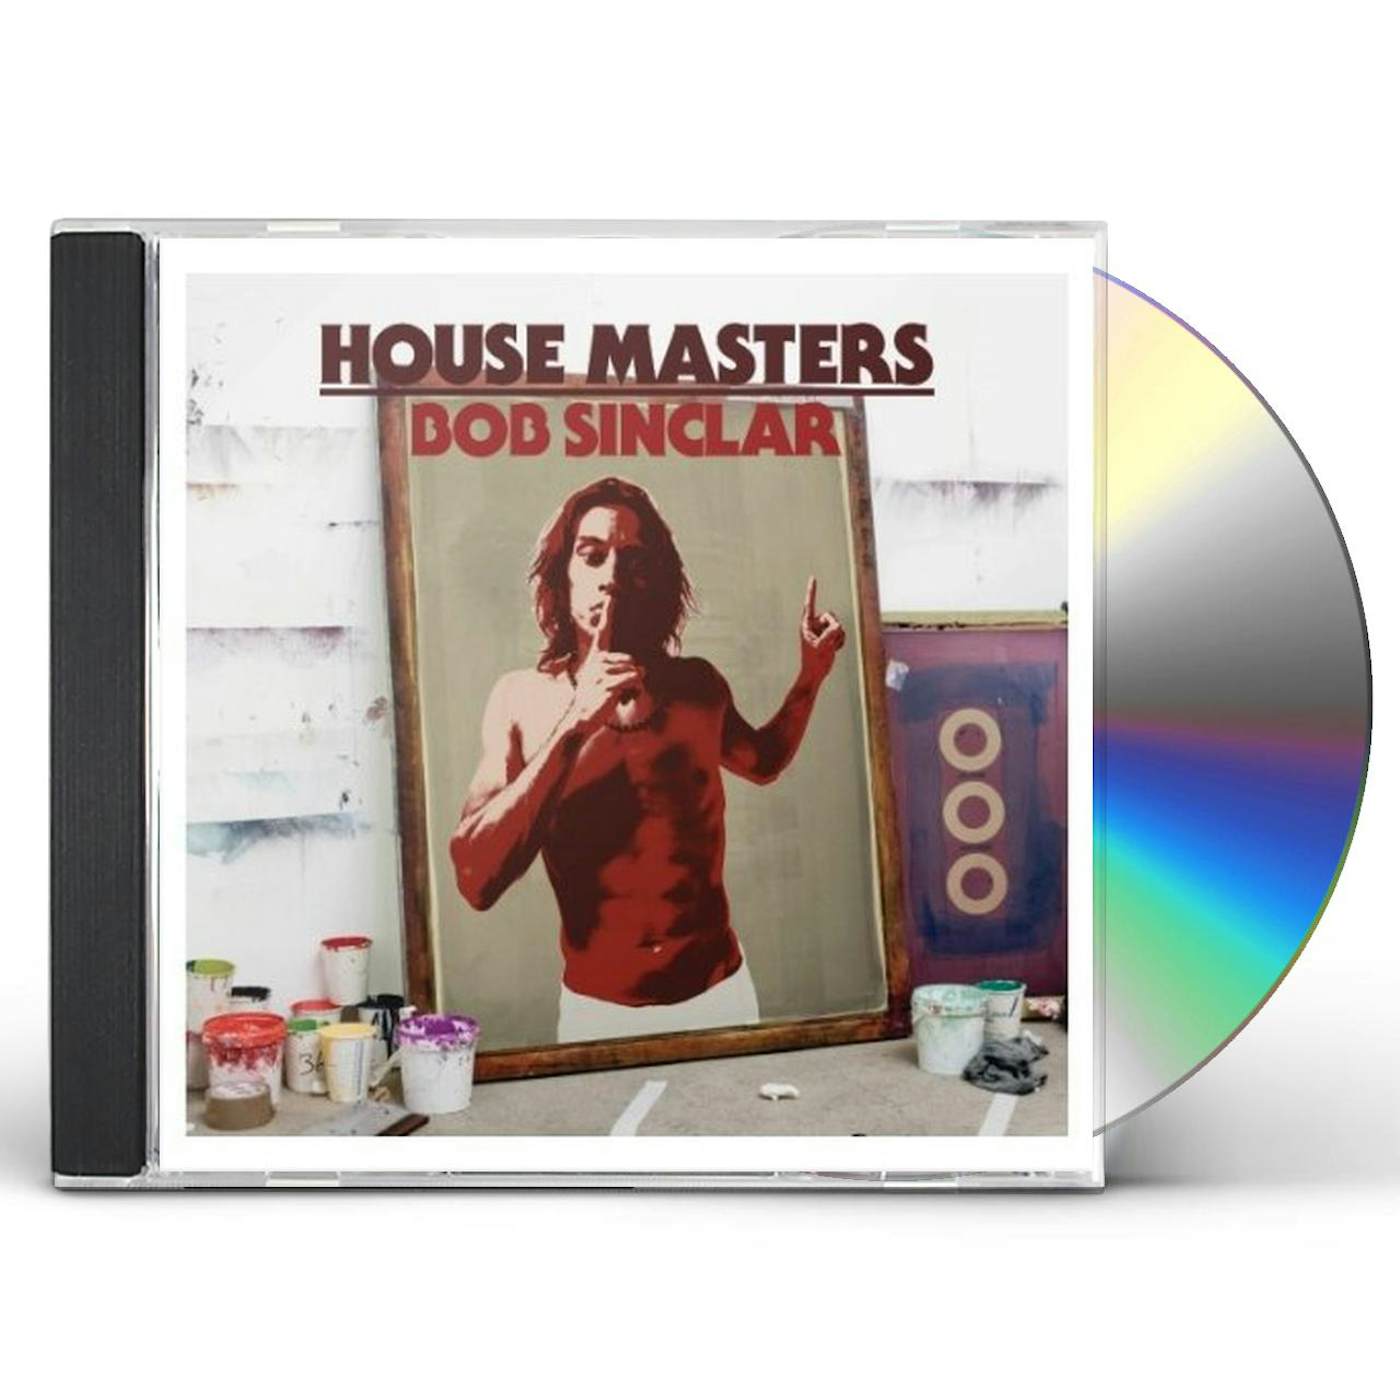 HOUSE MASTERS: BOB SINCLAR CD